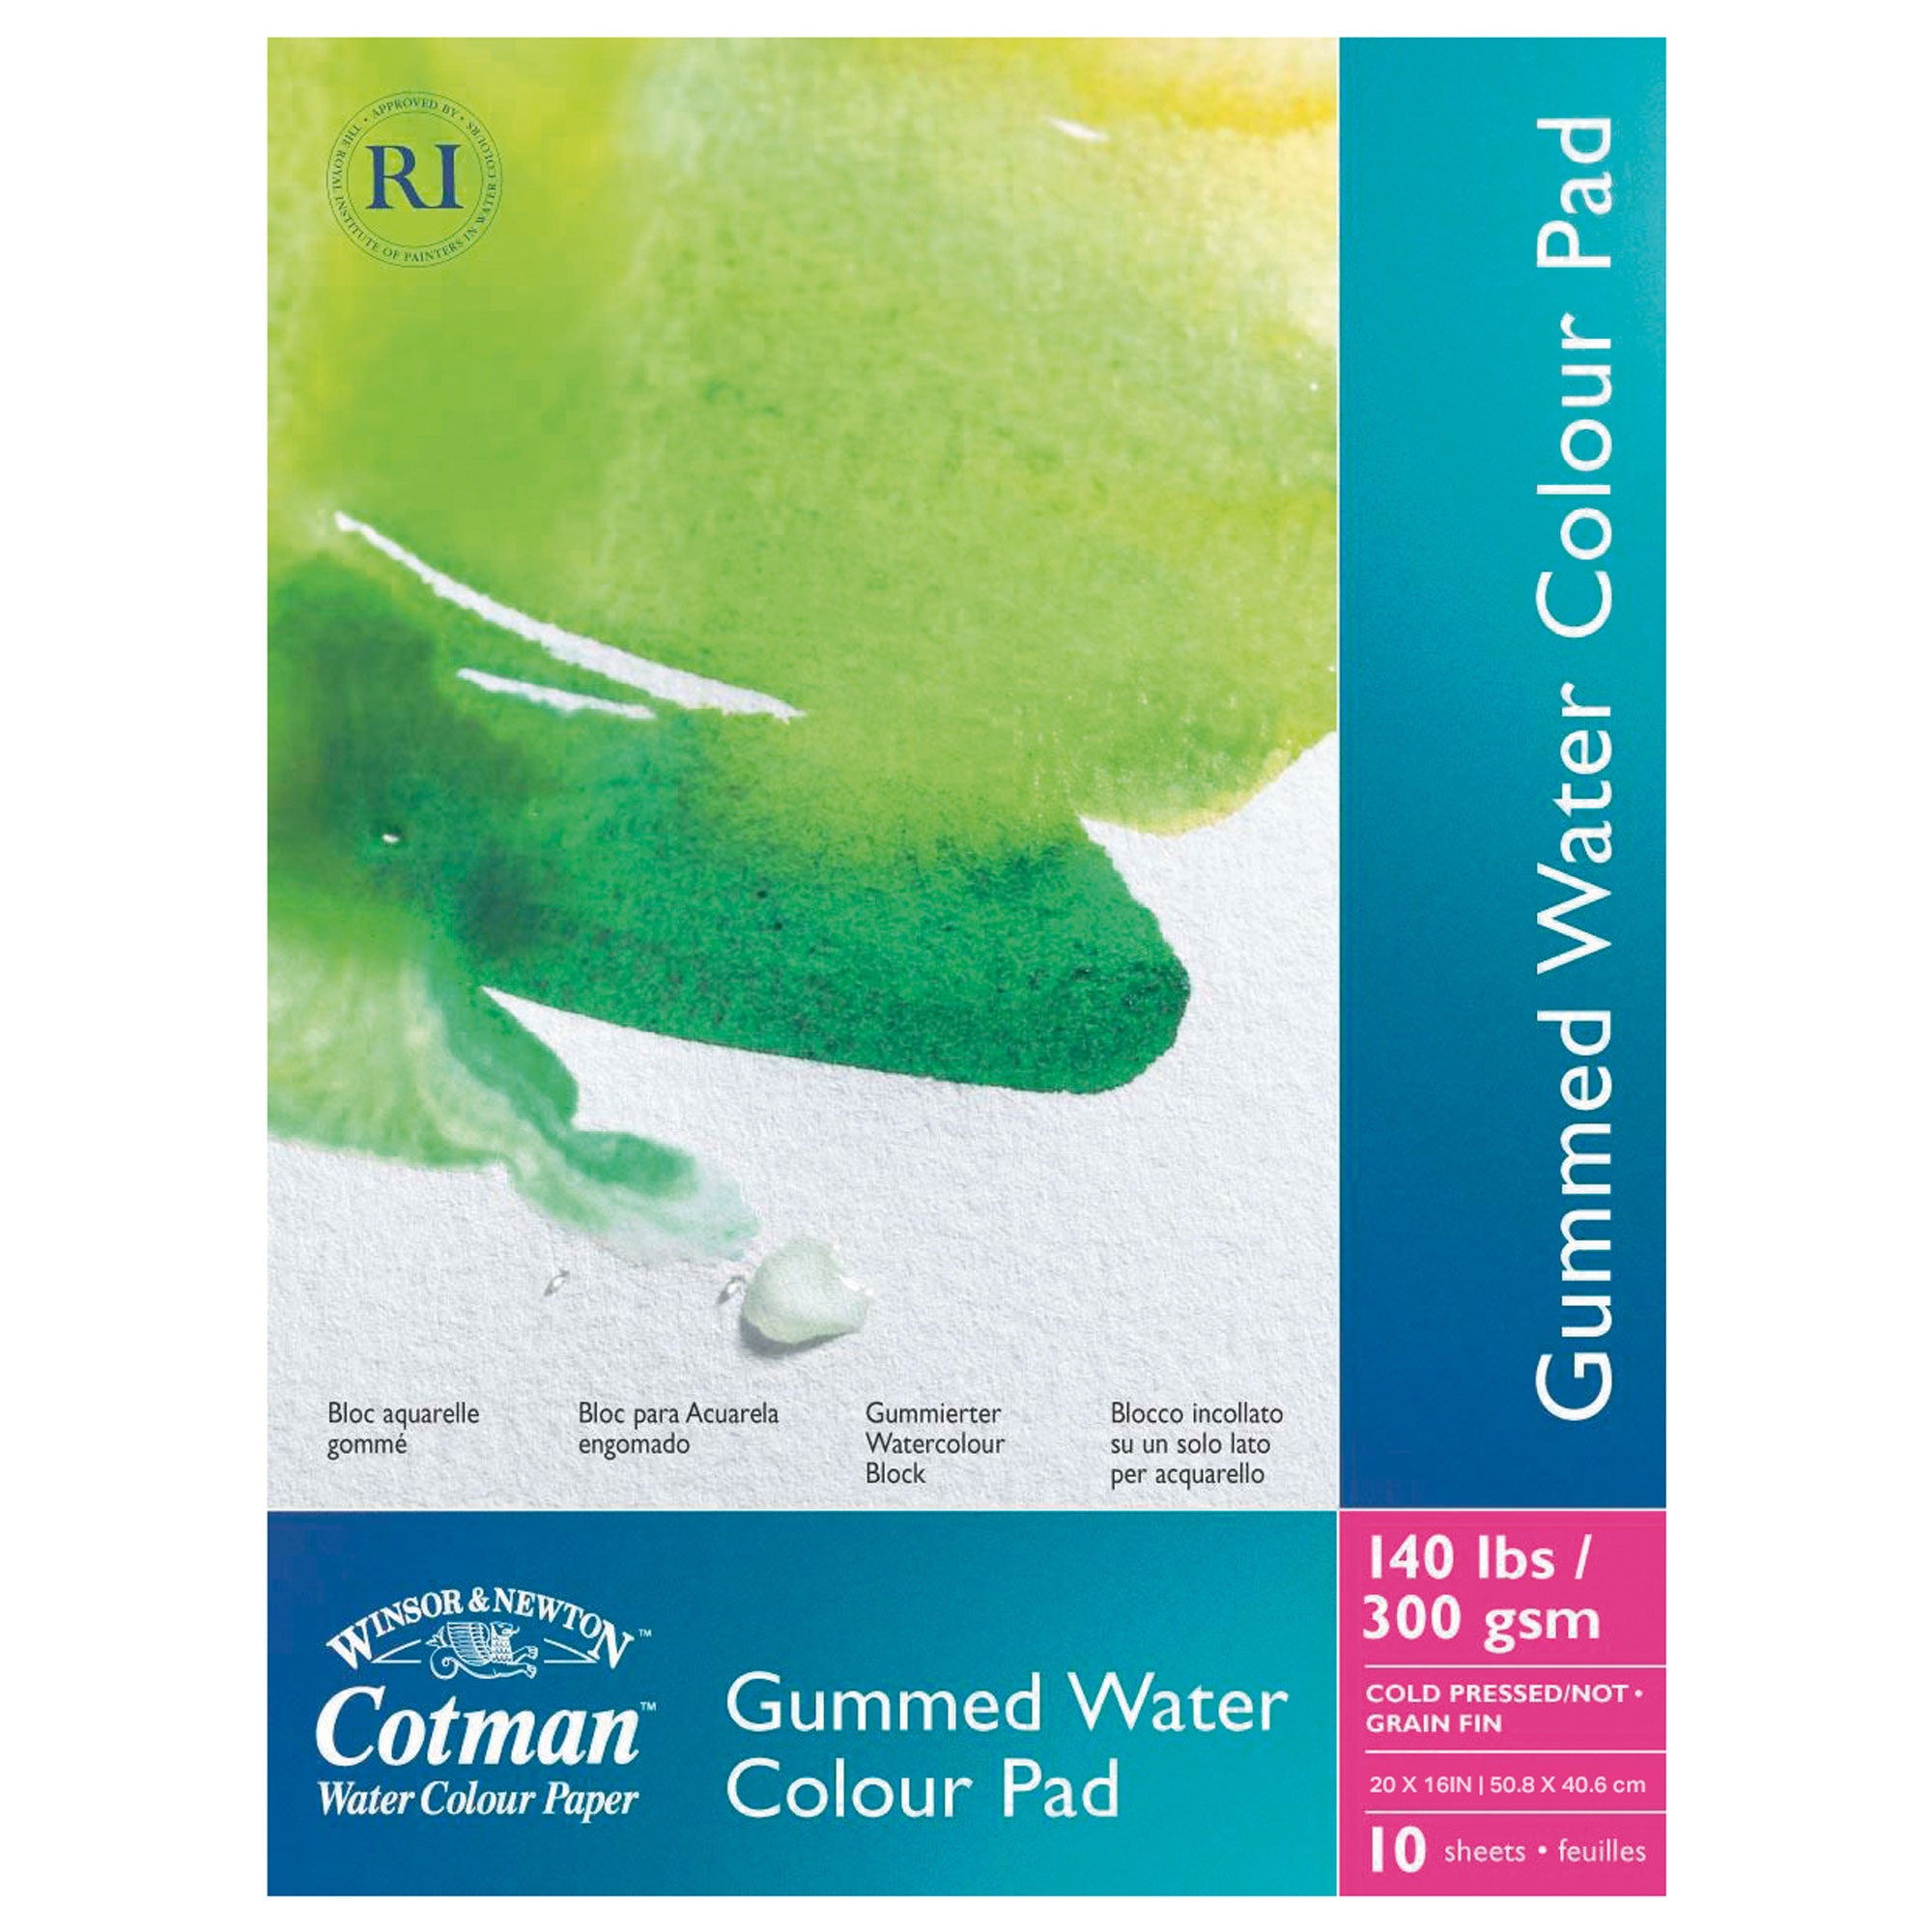 Winsor & Newton Cotman Gummed Watercolour Pad - Cold Pressed - 300gsm/140Ibs - 20" x 16" - 10 Sheets